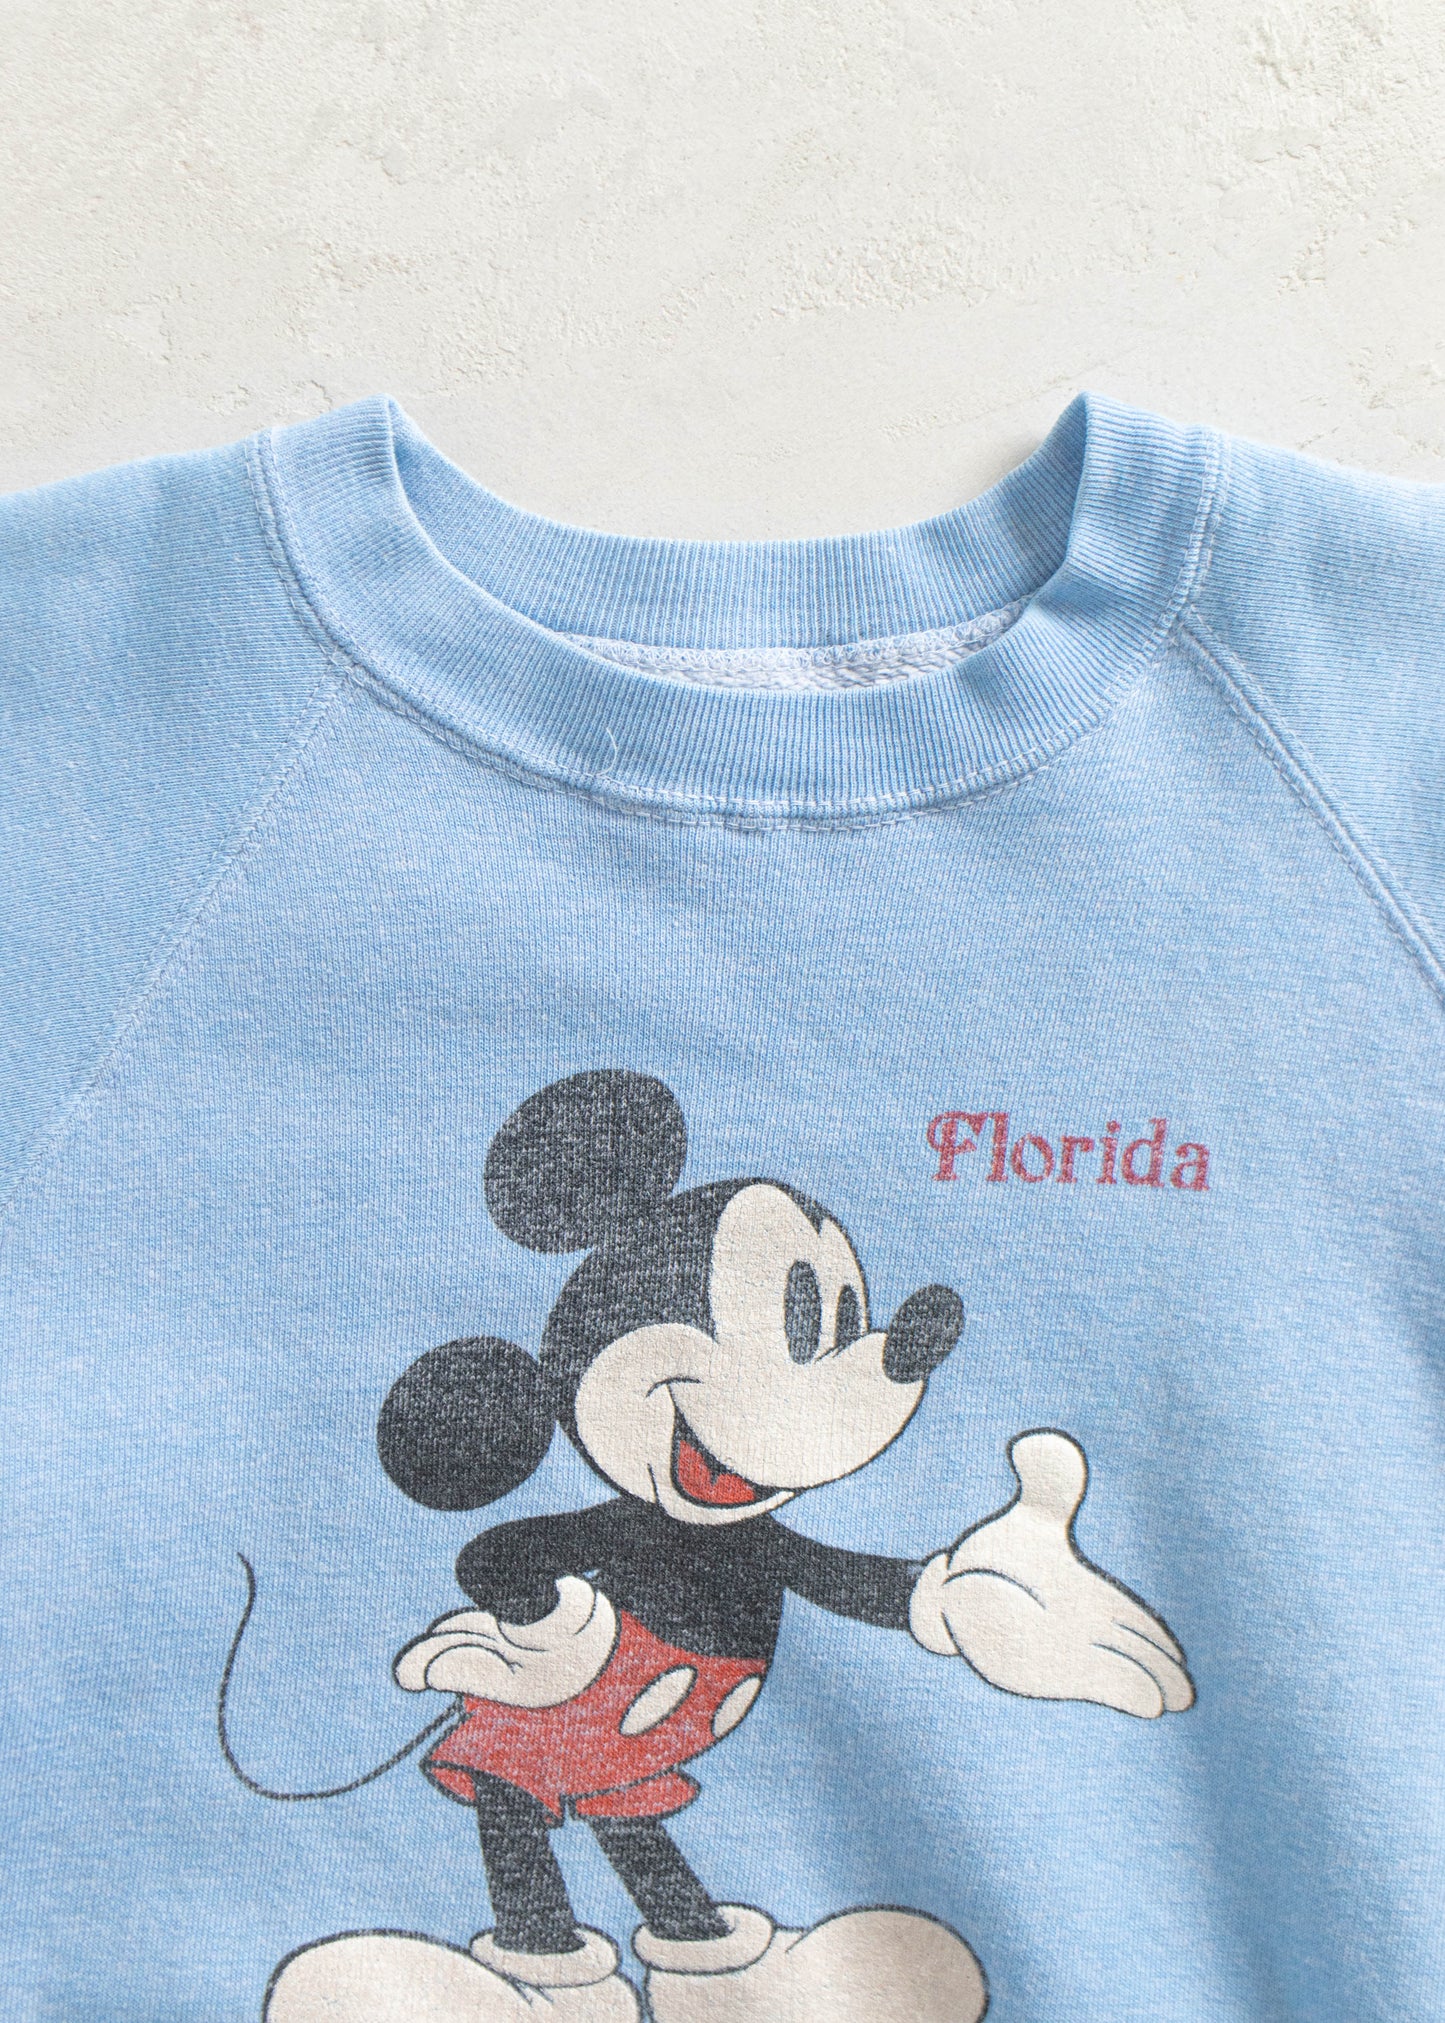 Vintage 1970s Mickey Mouse Florida Souvenir Sweatshirt Size S/M